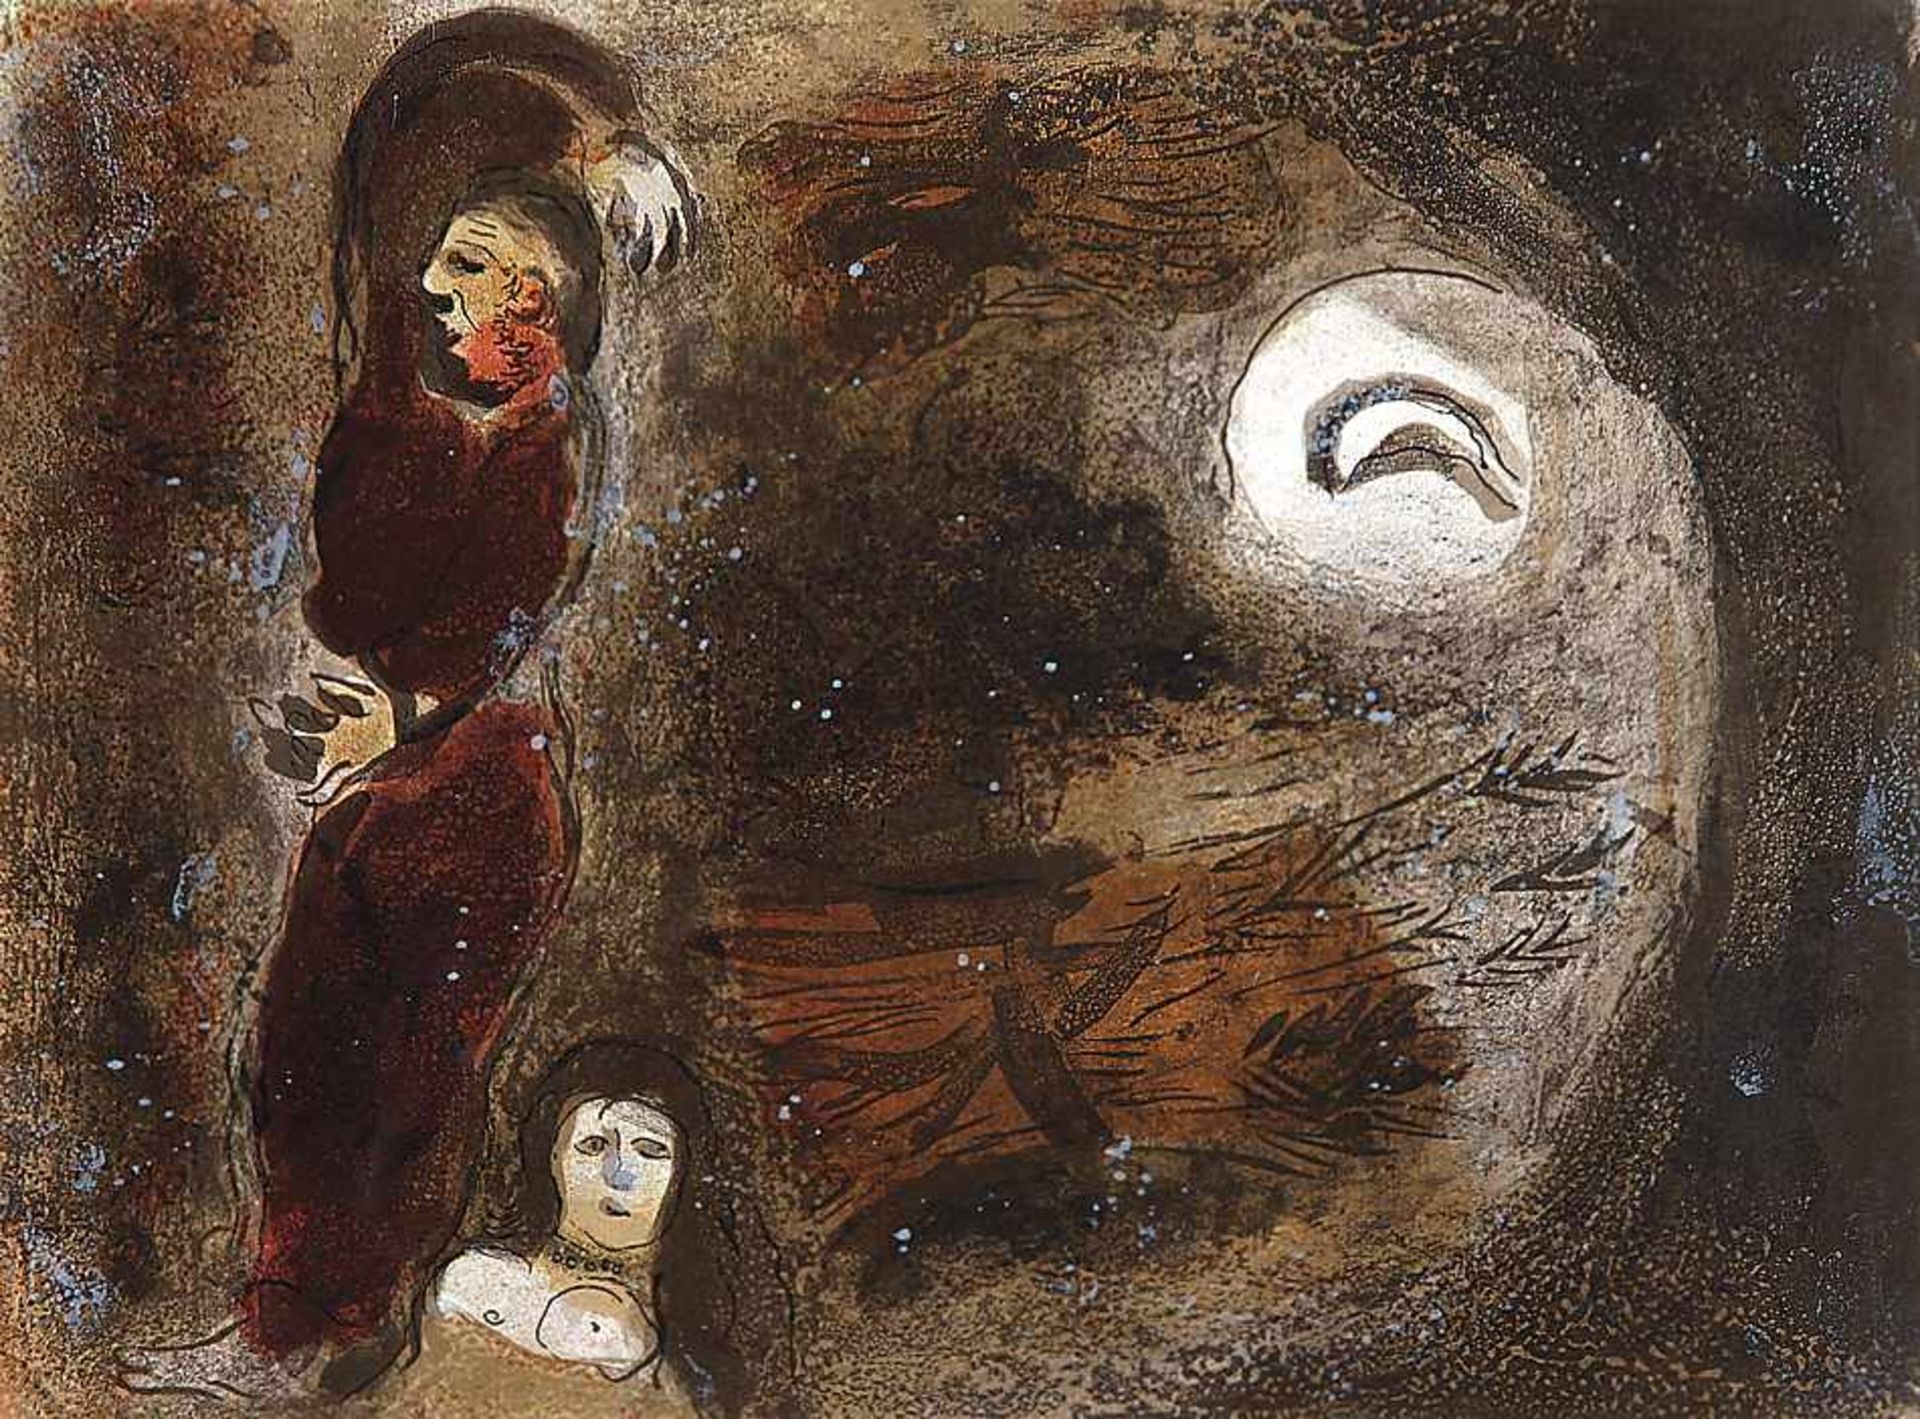 Chagall, Marc1887 Liosno/Witebsk - 1985 Saint-Paul-de-Vence; russ. Maler, Illustrator, Radierer,